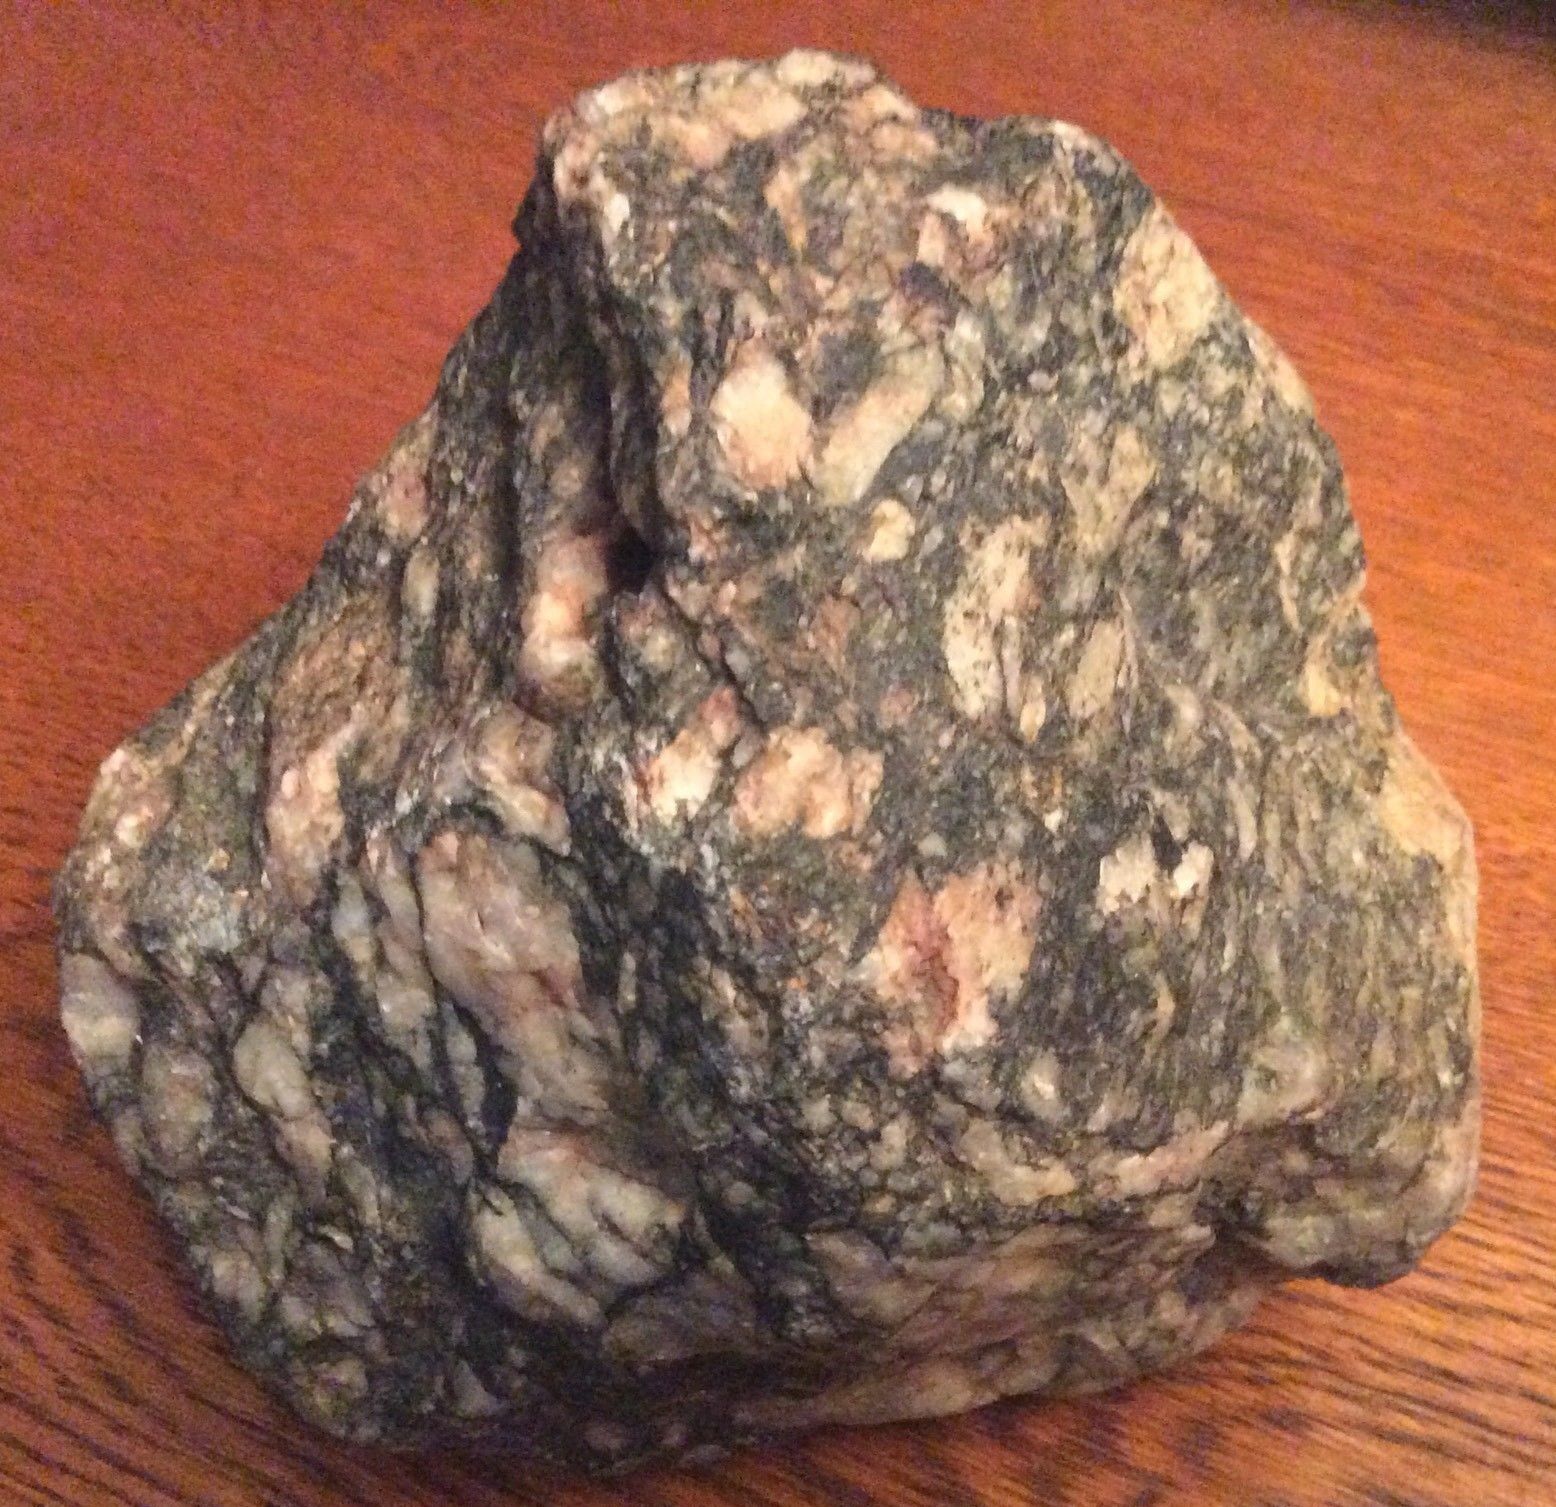 Lunar Breccia Meteorite Unslice From NEA 1225 gr - Rare Moon Rock Meteorite